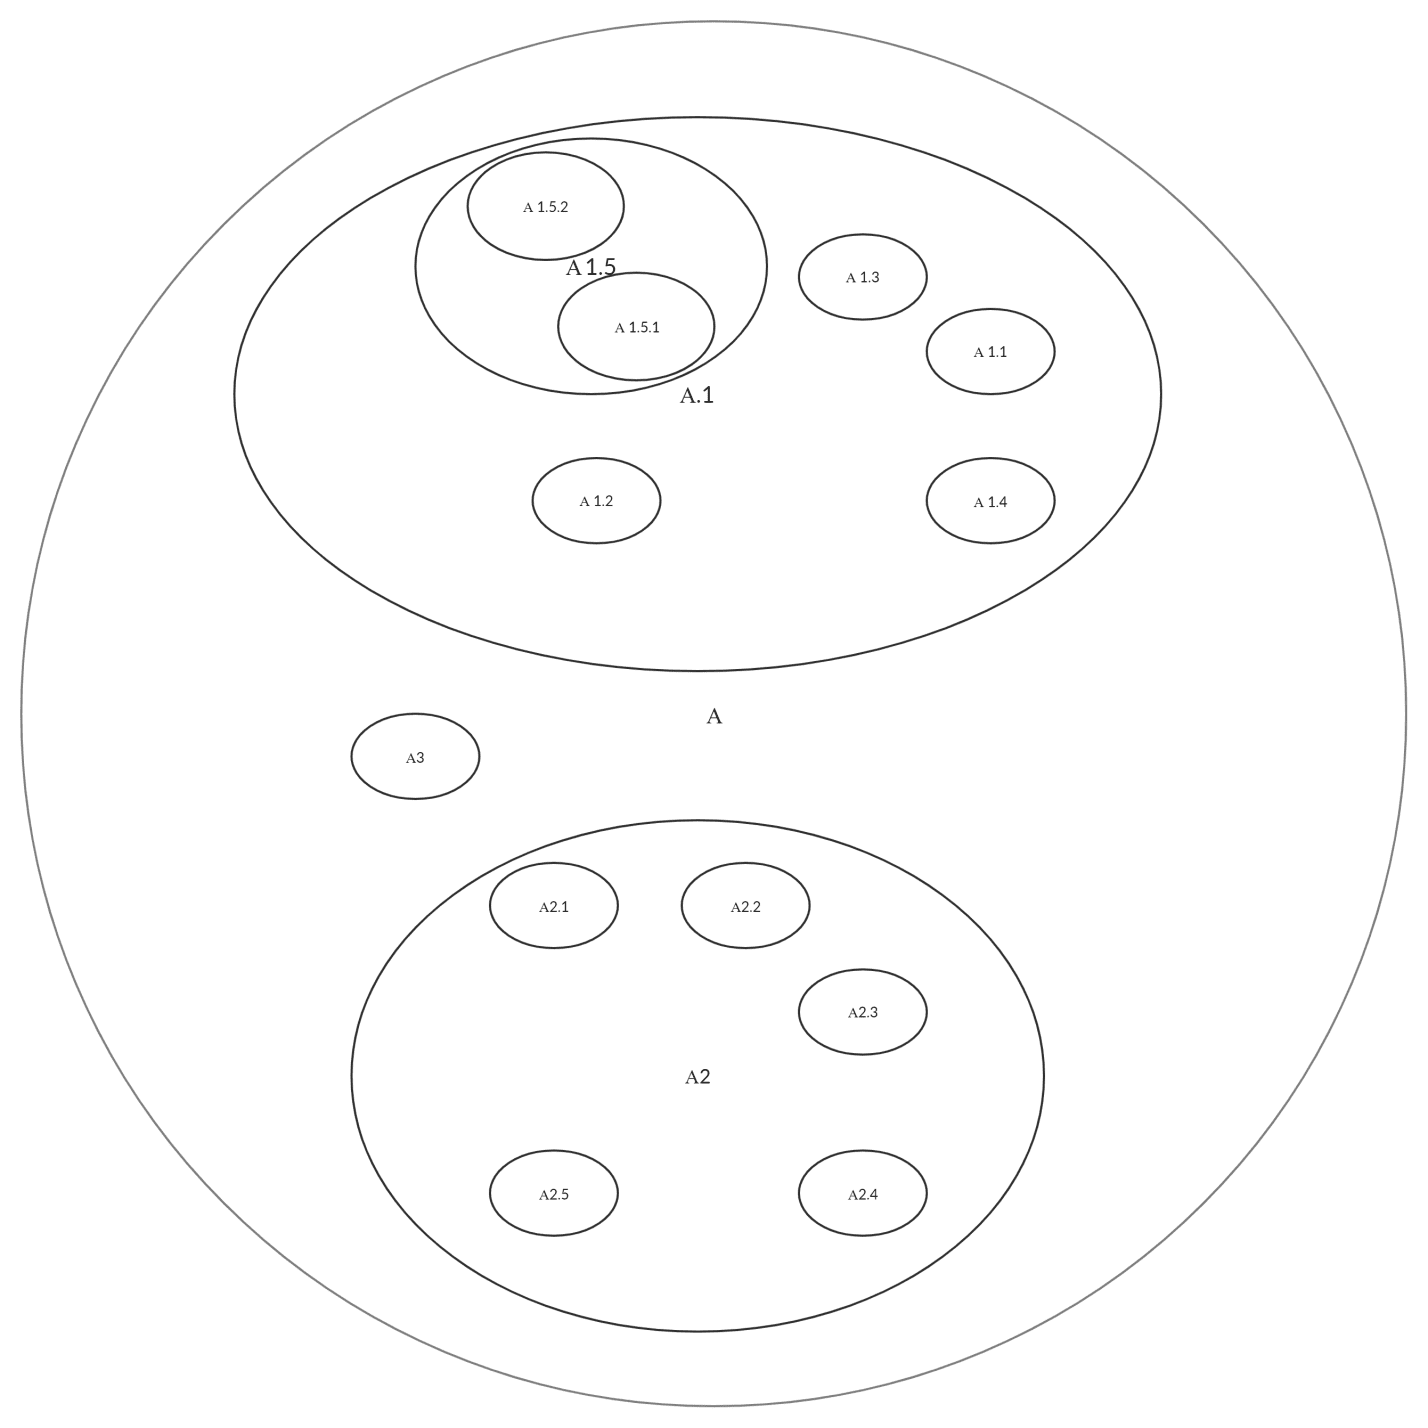 Composition model